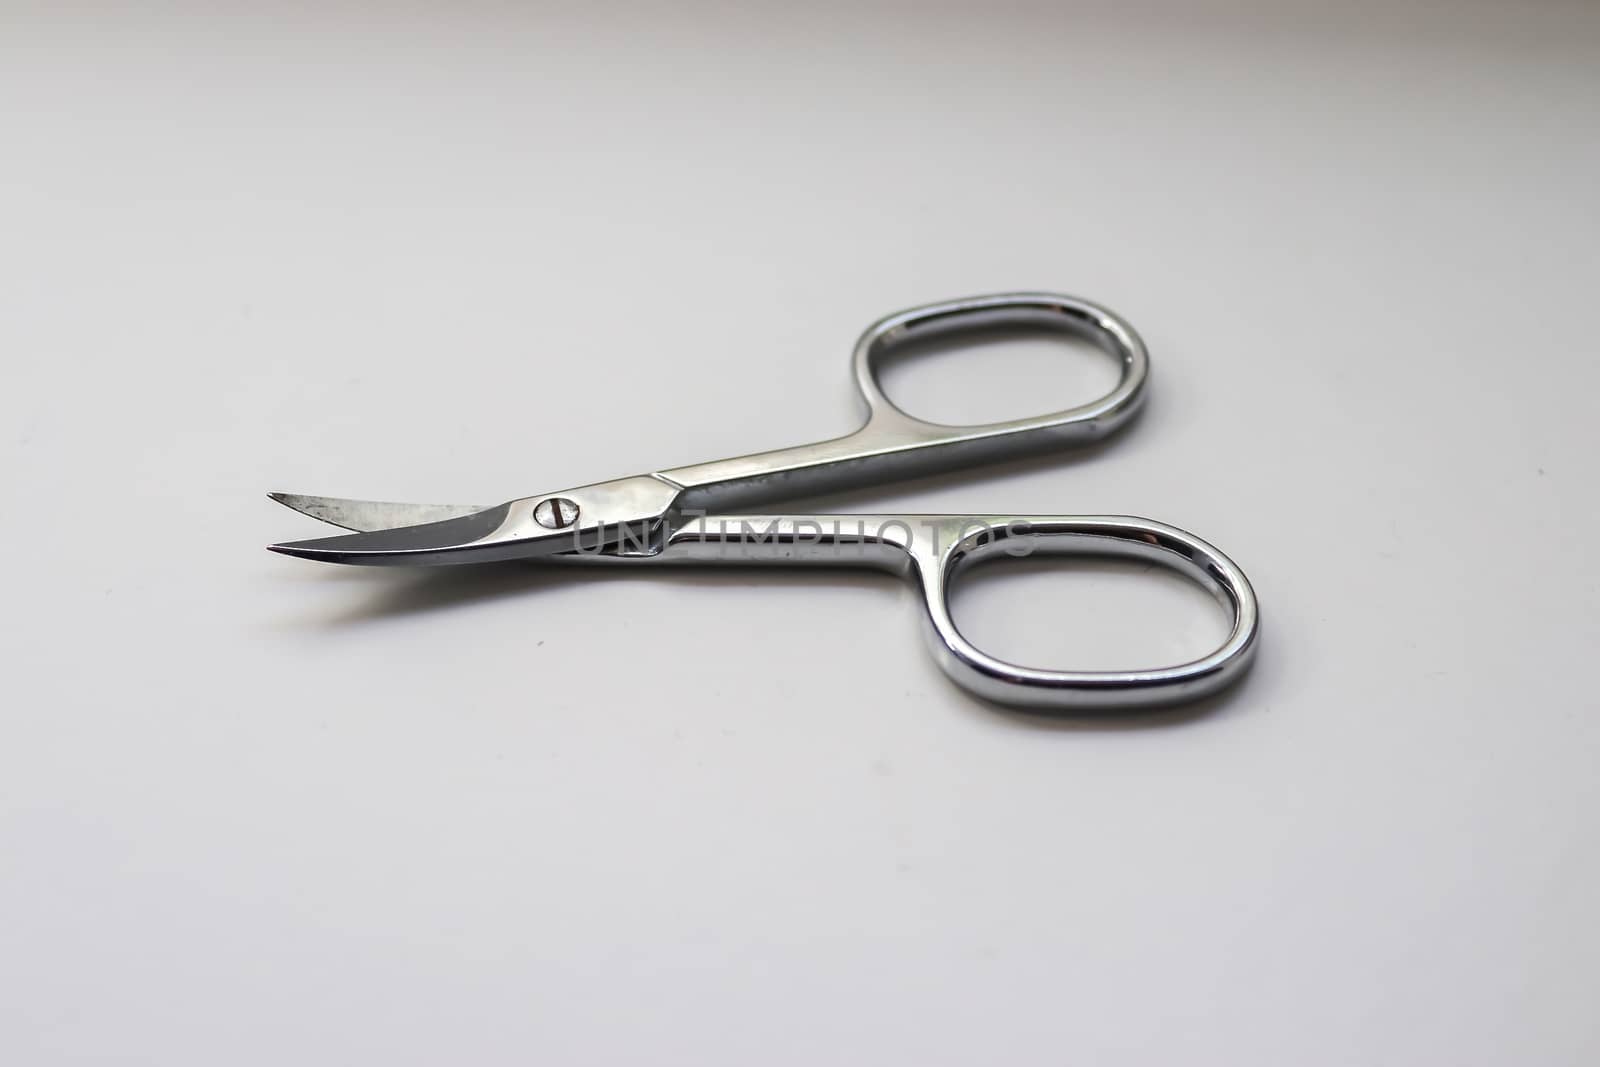 manicure scissors closeup on white background. by MP_foto71